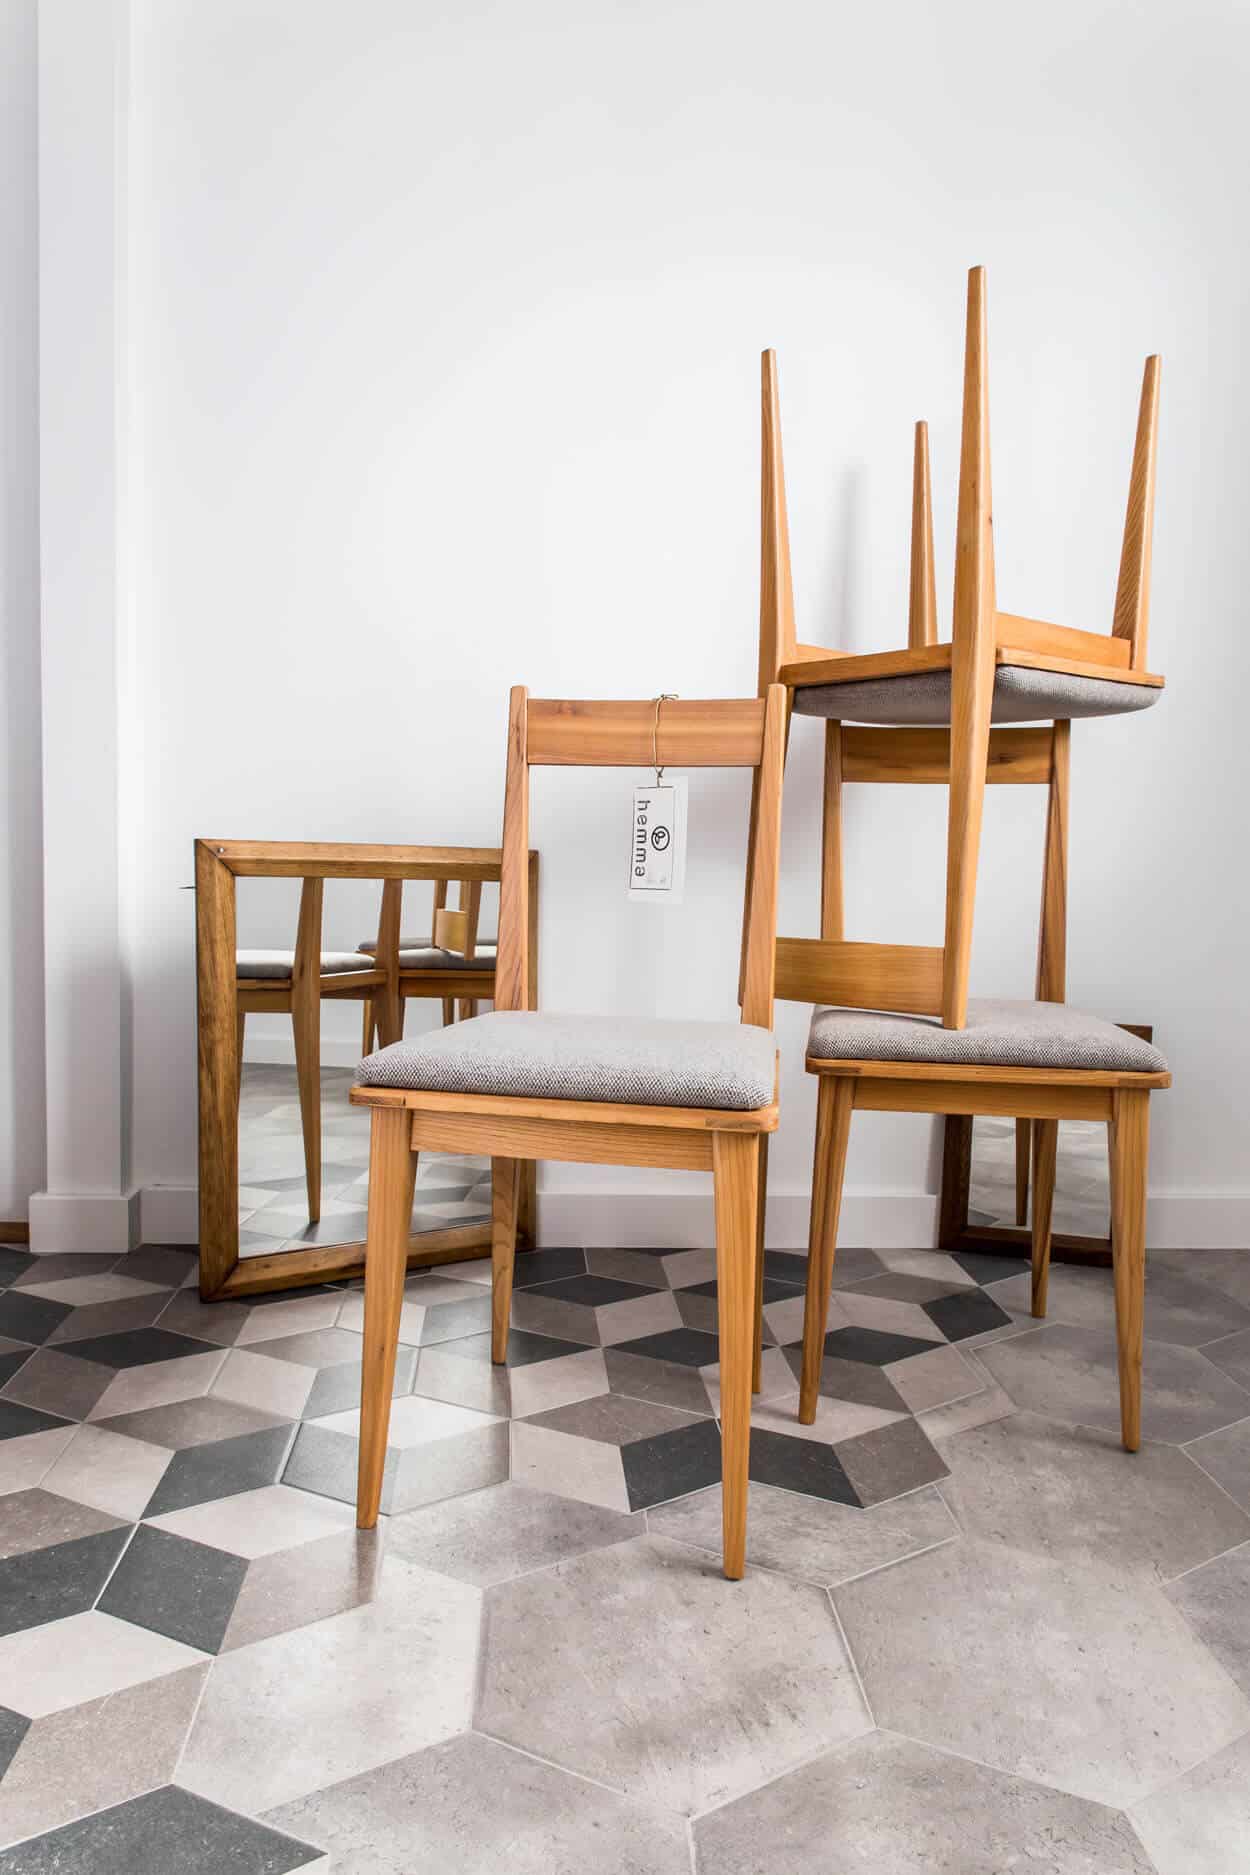 A set of four chairs designed by O. Szlekys around 1947